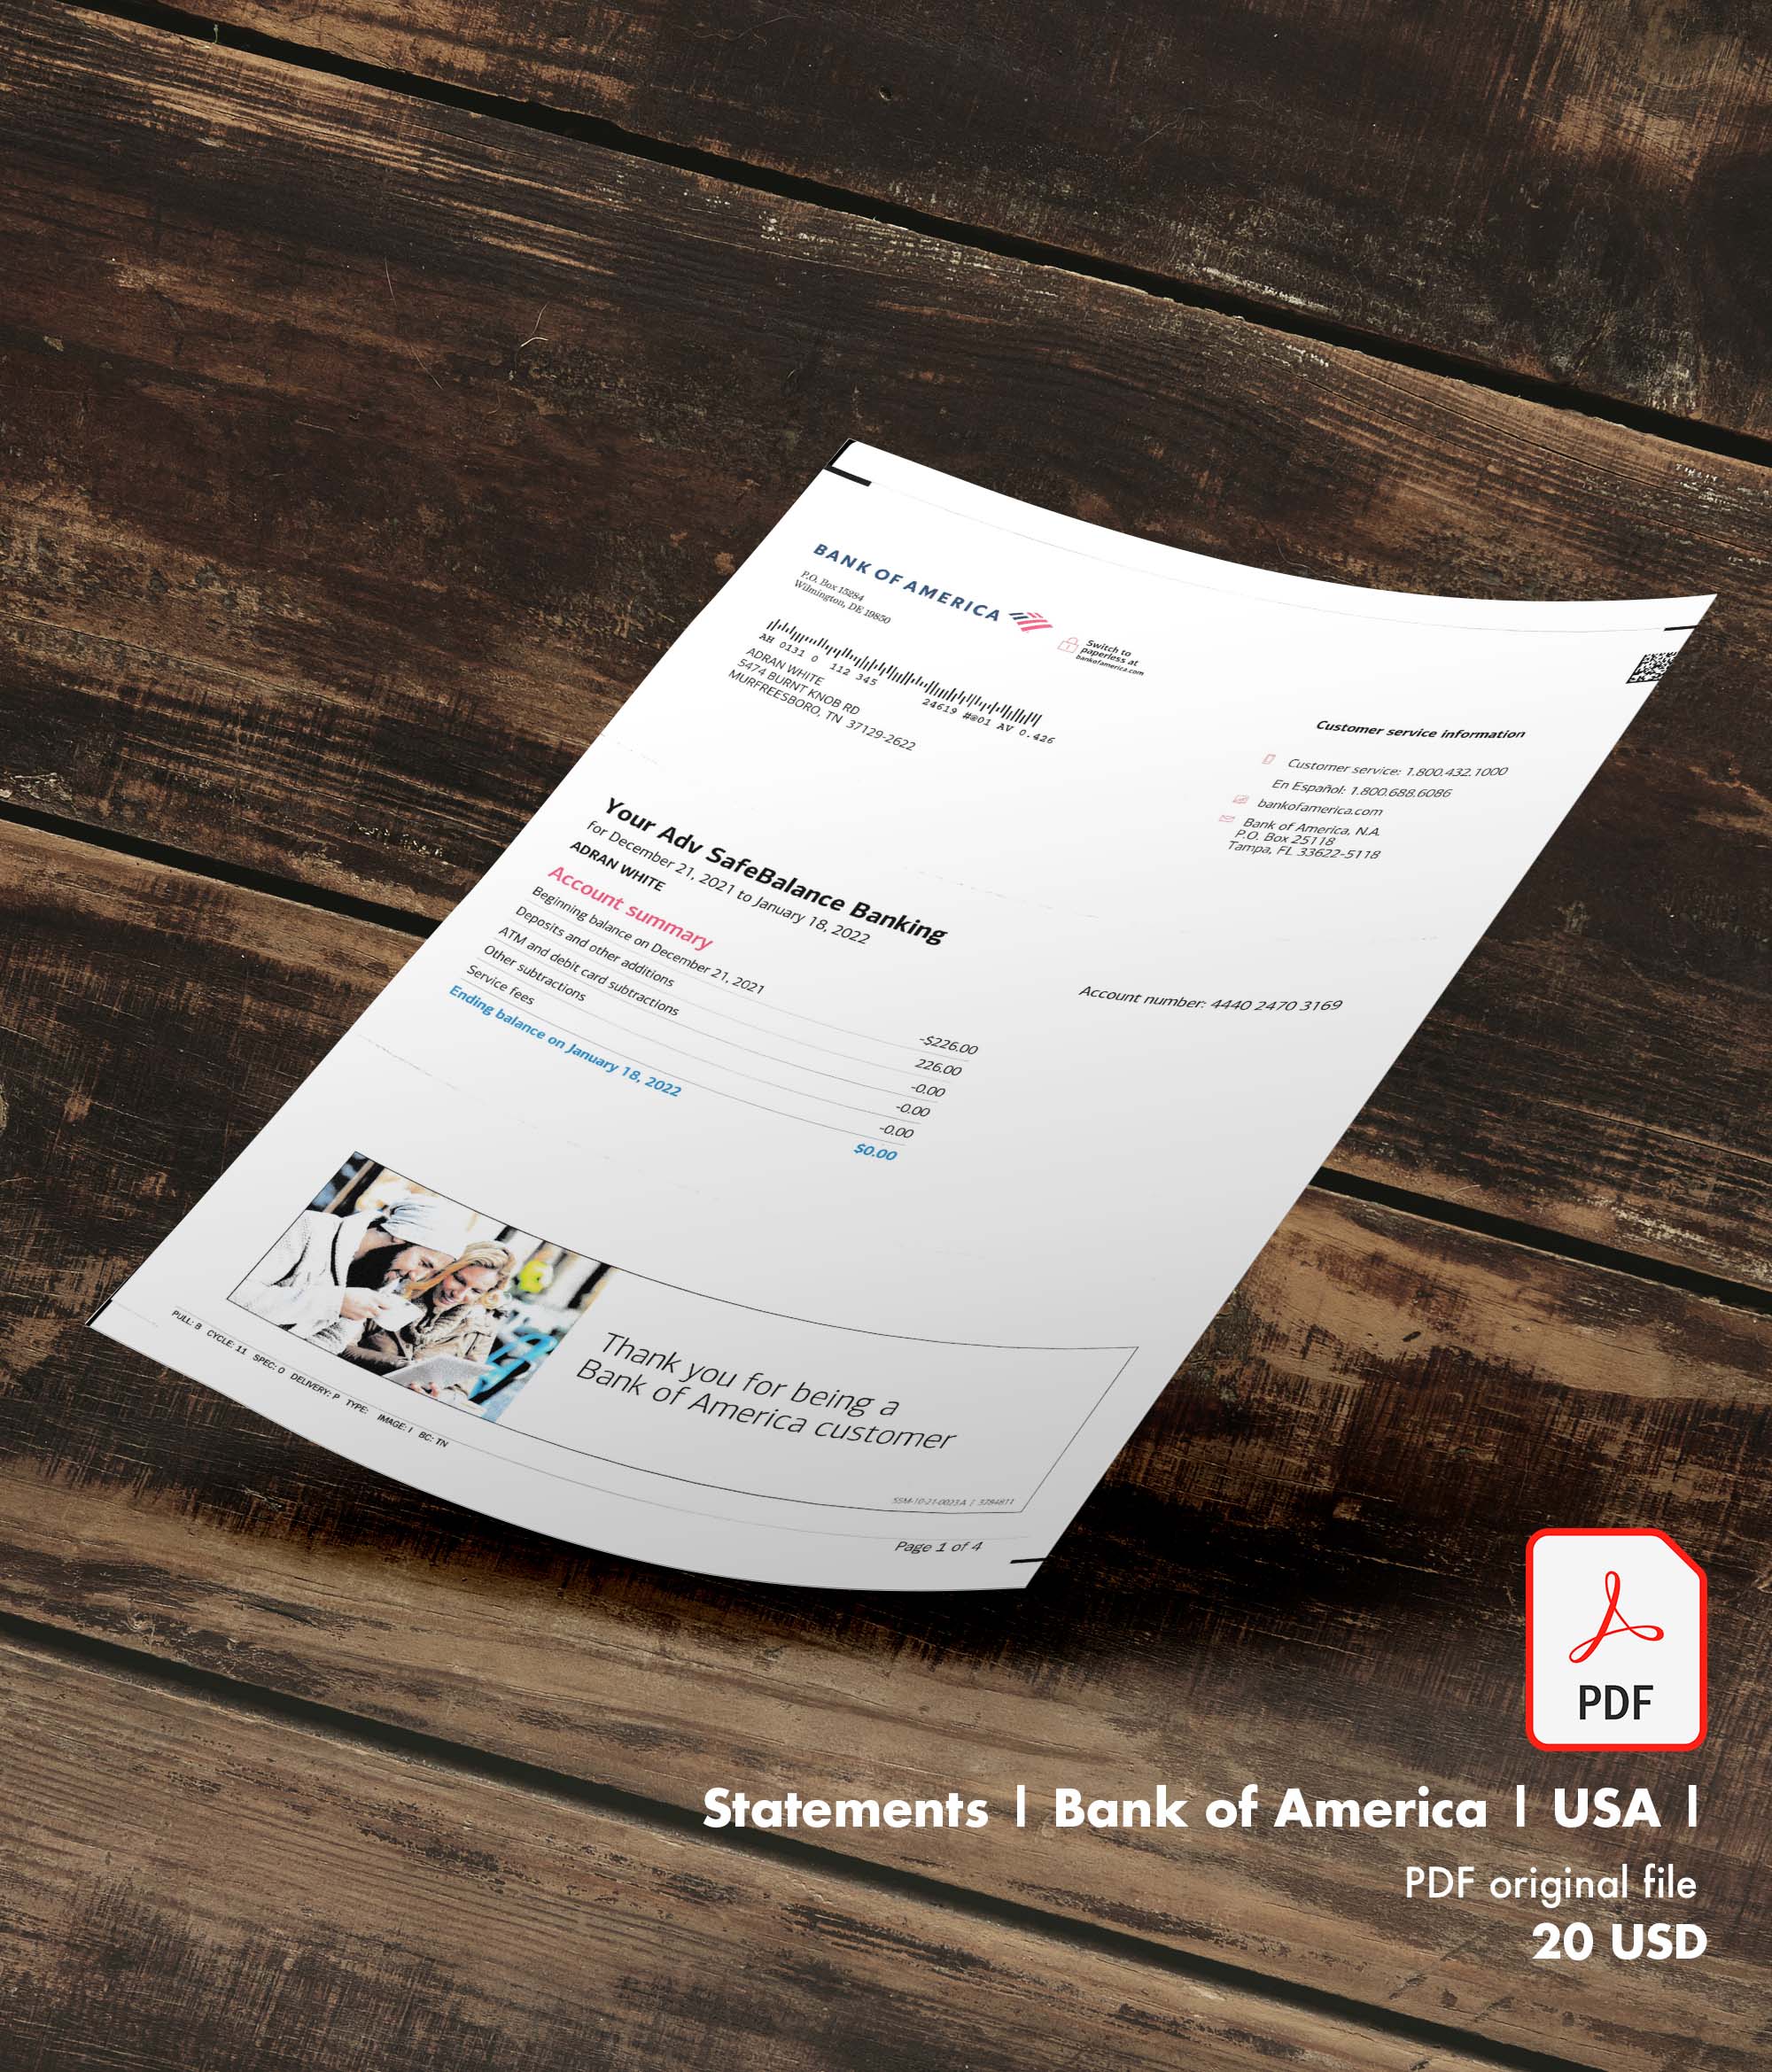 Statement | Bank of America | USA |1